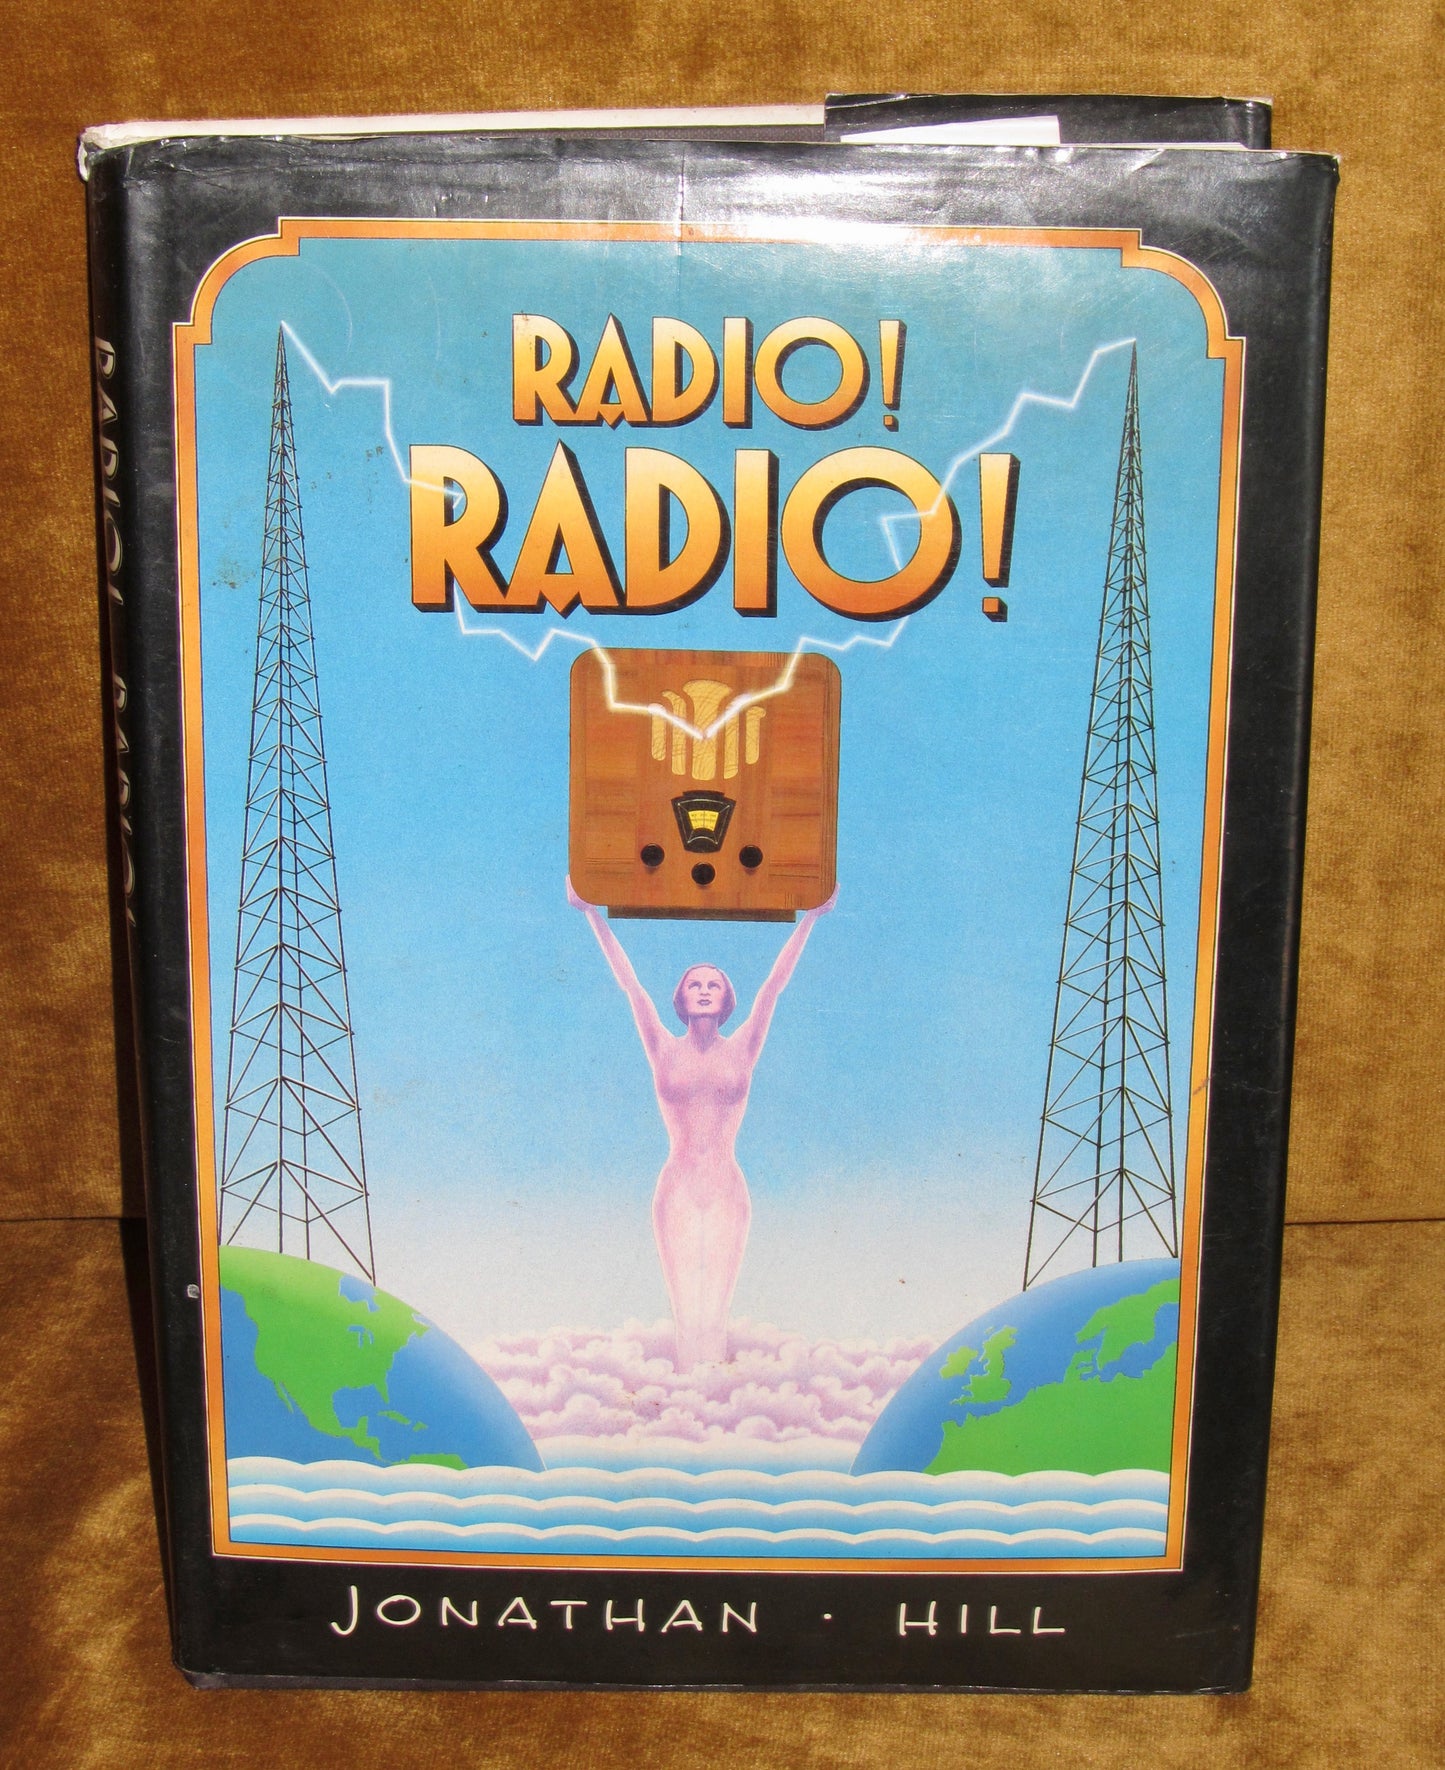 1986 Edition Of Radio! Radio! Signed By Jonathan Hill. ISNB 0951144812